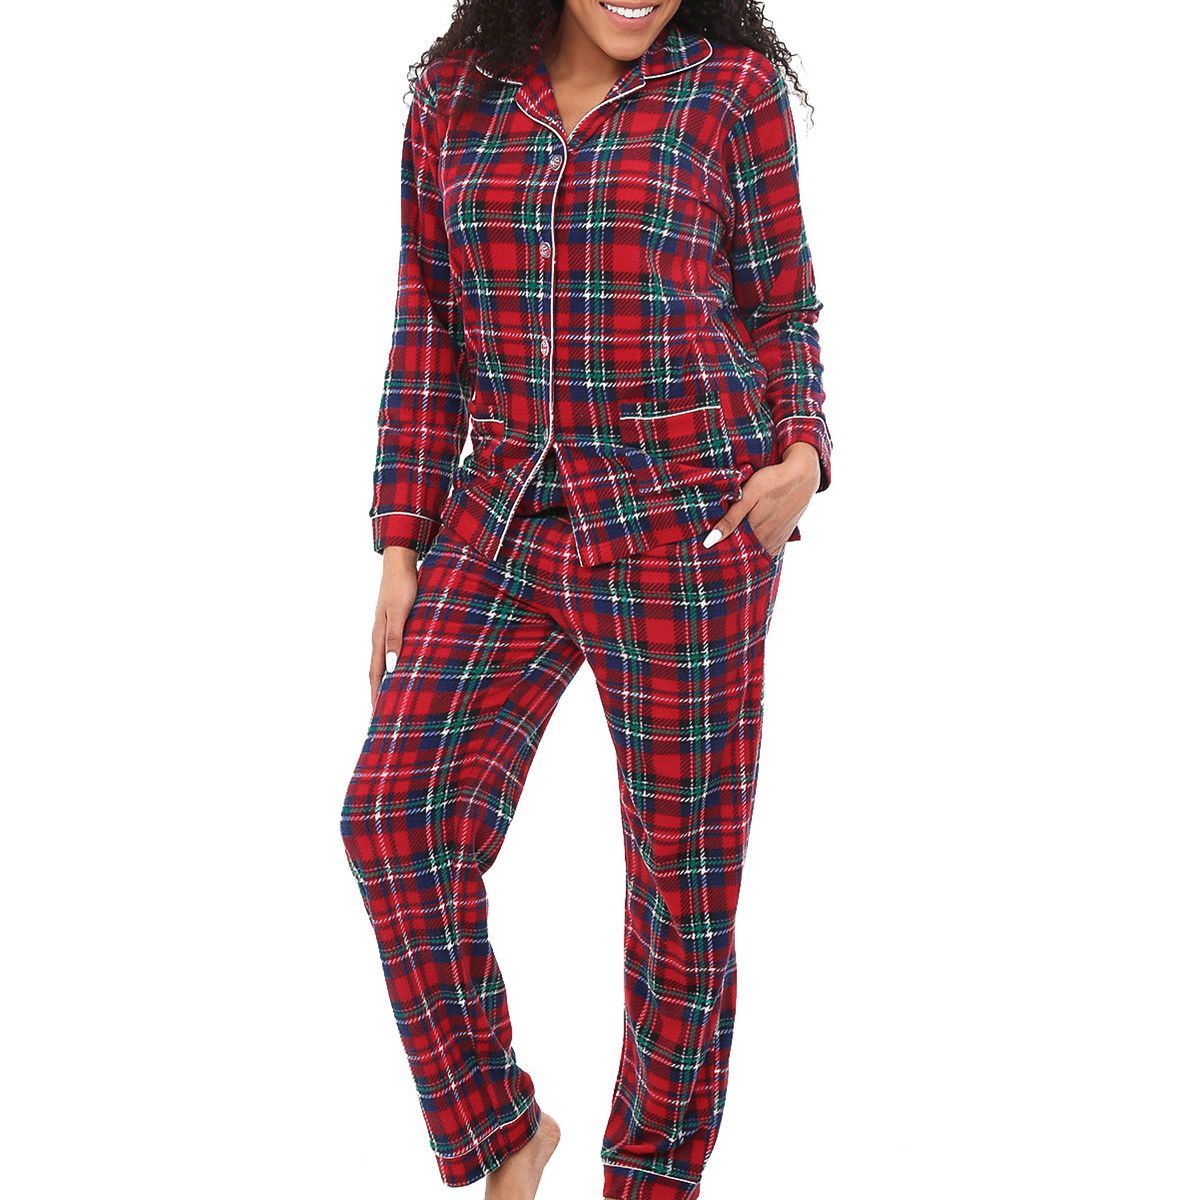 Women's Soft Warm Fleece Pajamas Lounge Set, Long Sleeve Top and Pants, PJ | Target